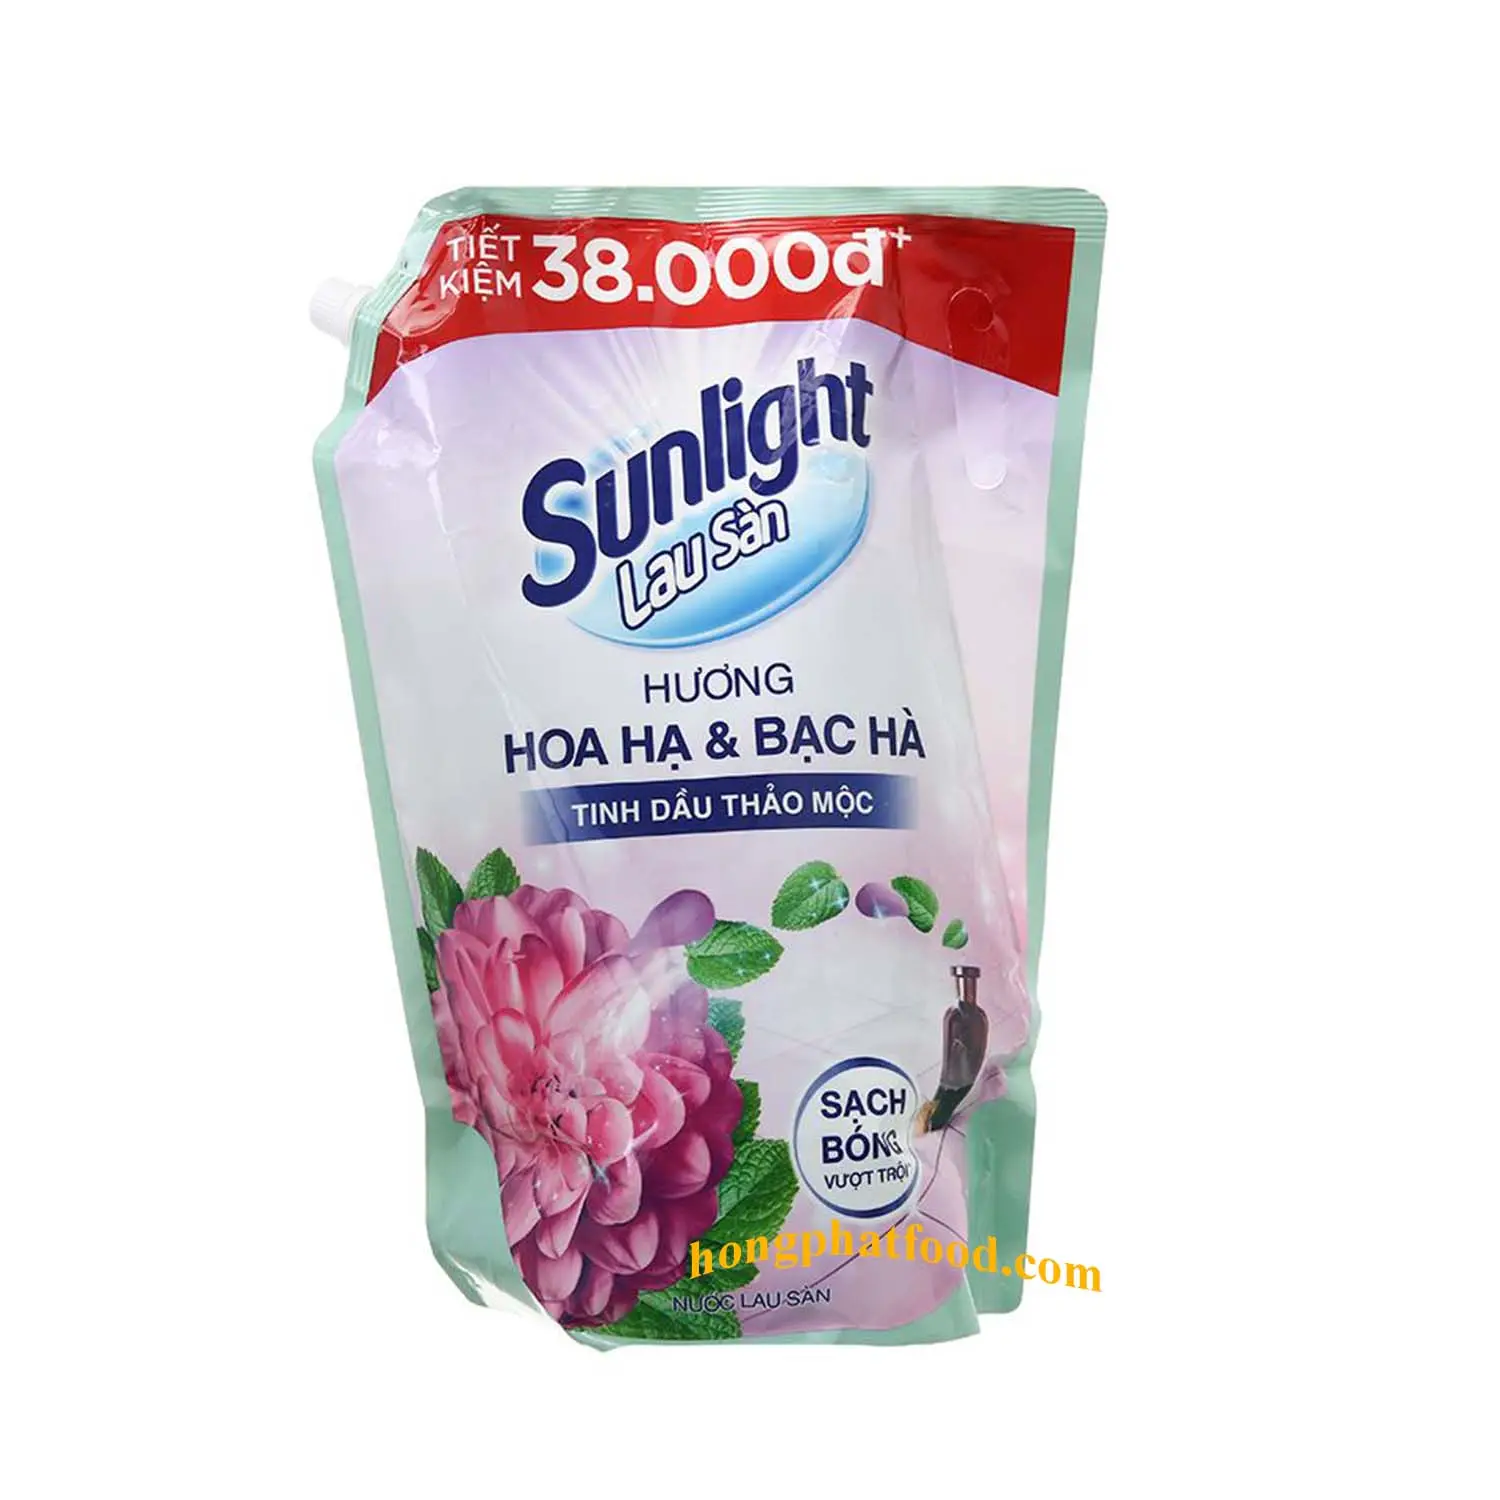 Sunligh-t mint fragrance floor Cleaning Liquid bag 3.6kg Quick-drying Formula Lasting Fragrance Floor Cleaner Liquid Viet Nam